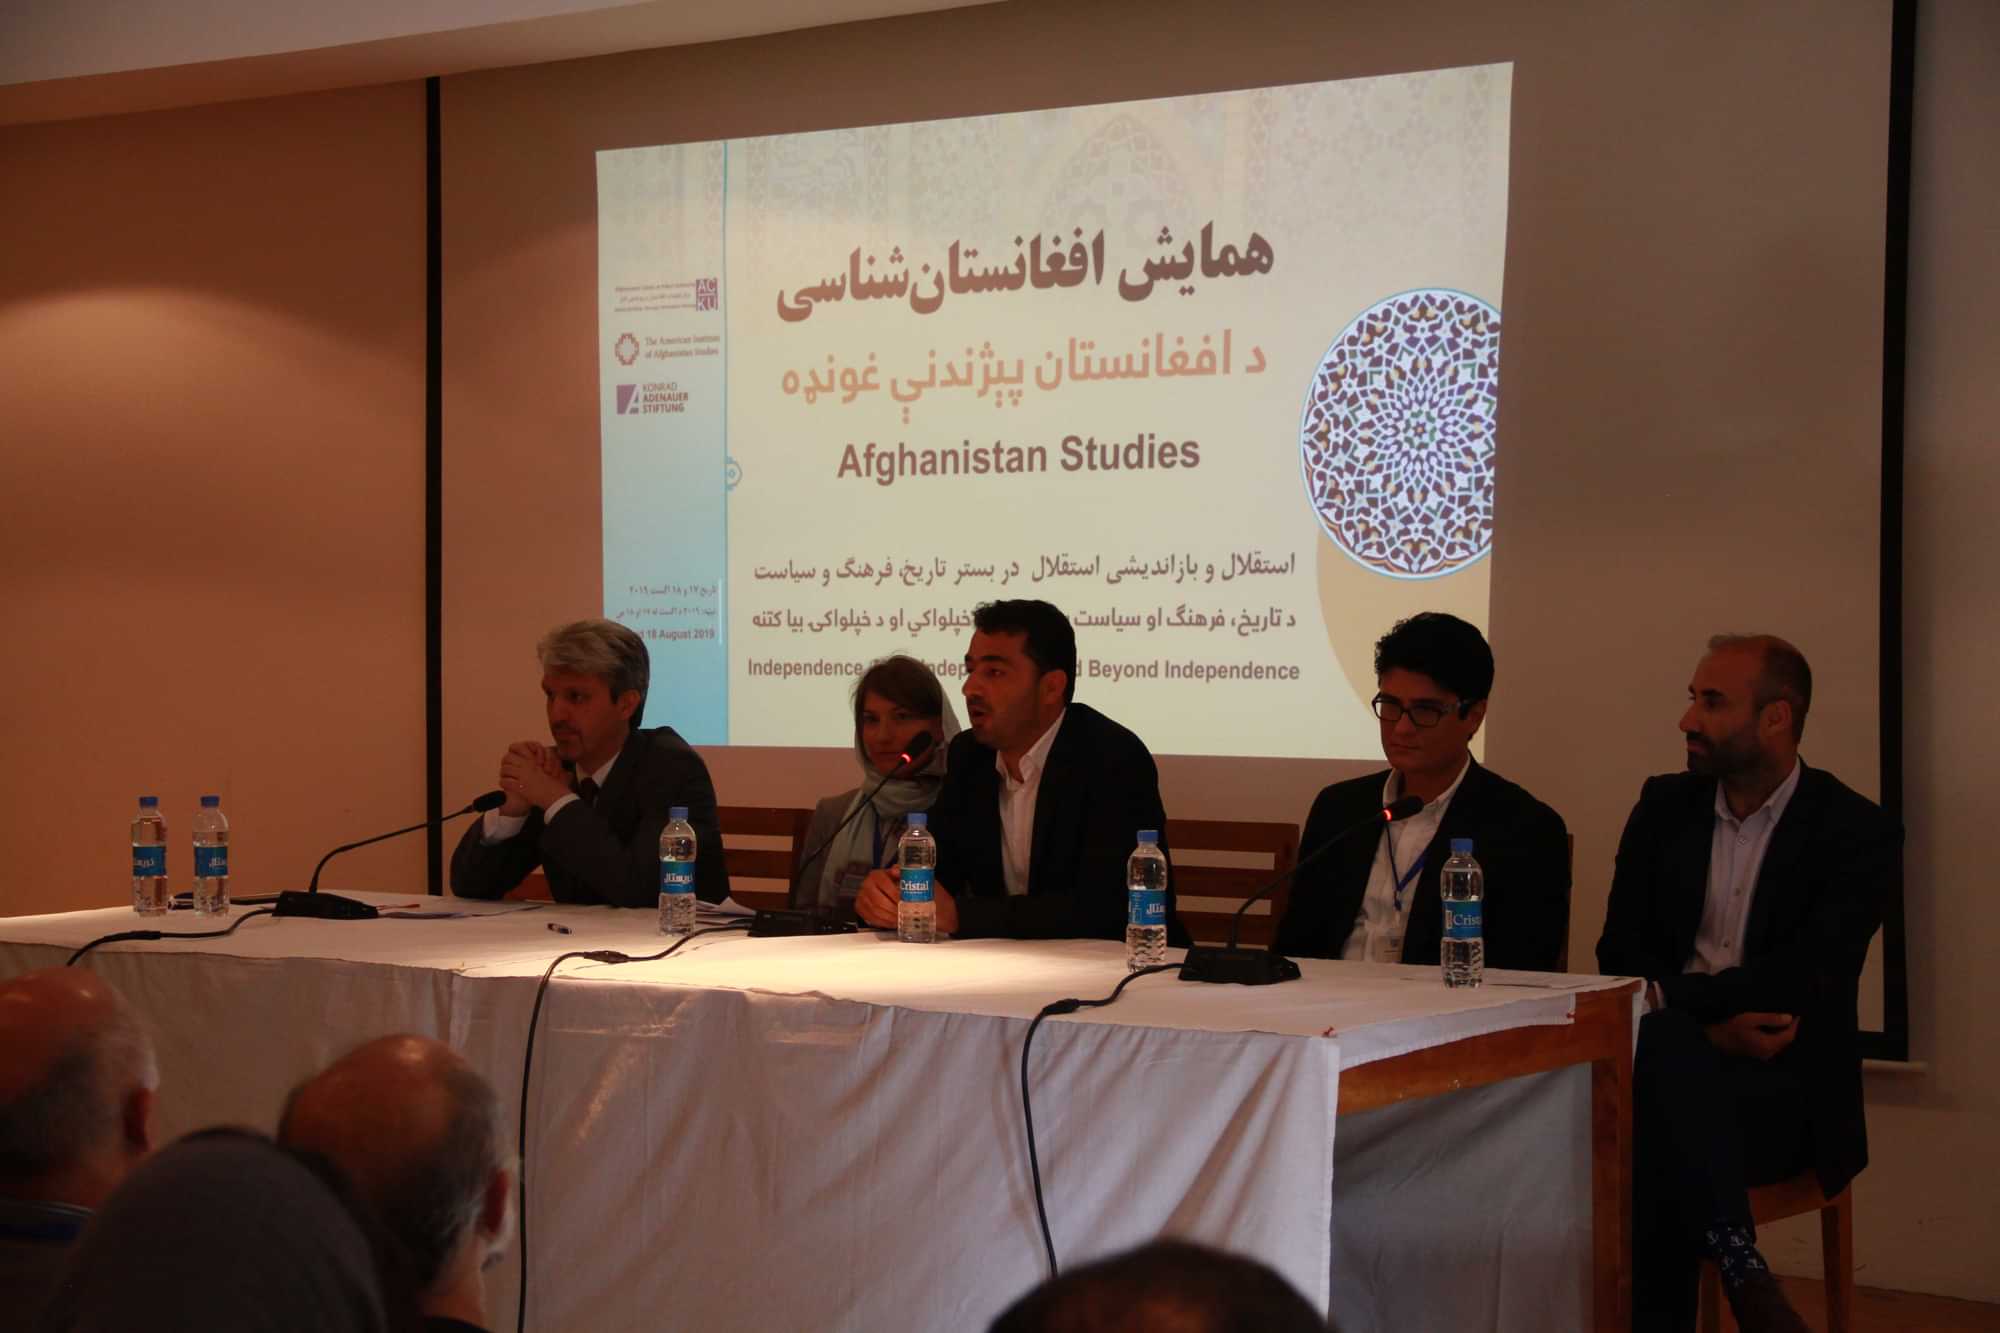 Afghanistan Studies Conference: Independence, More Independence and Beyond Independence